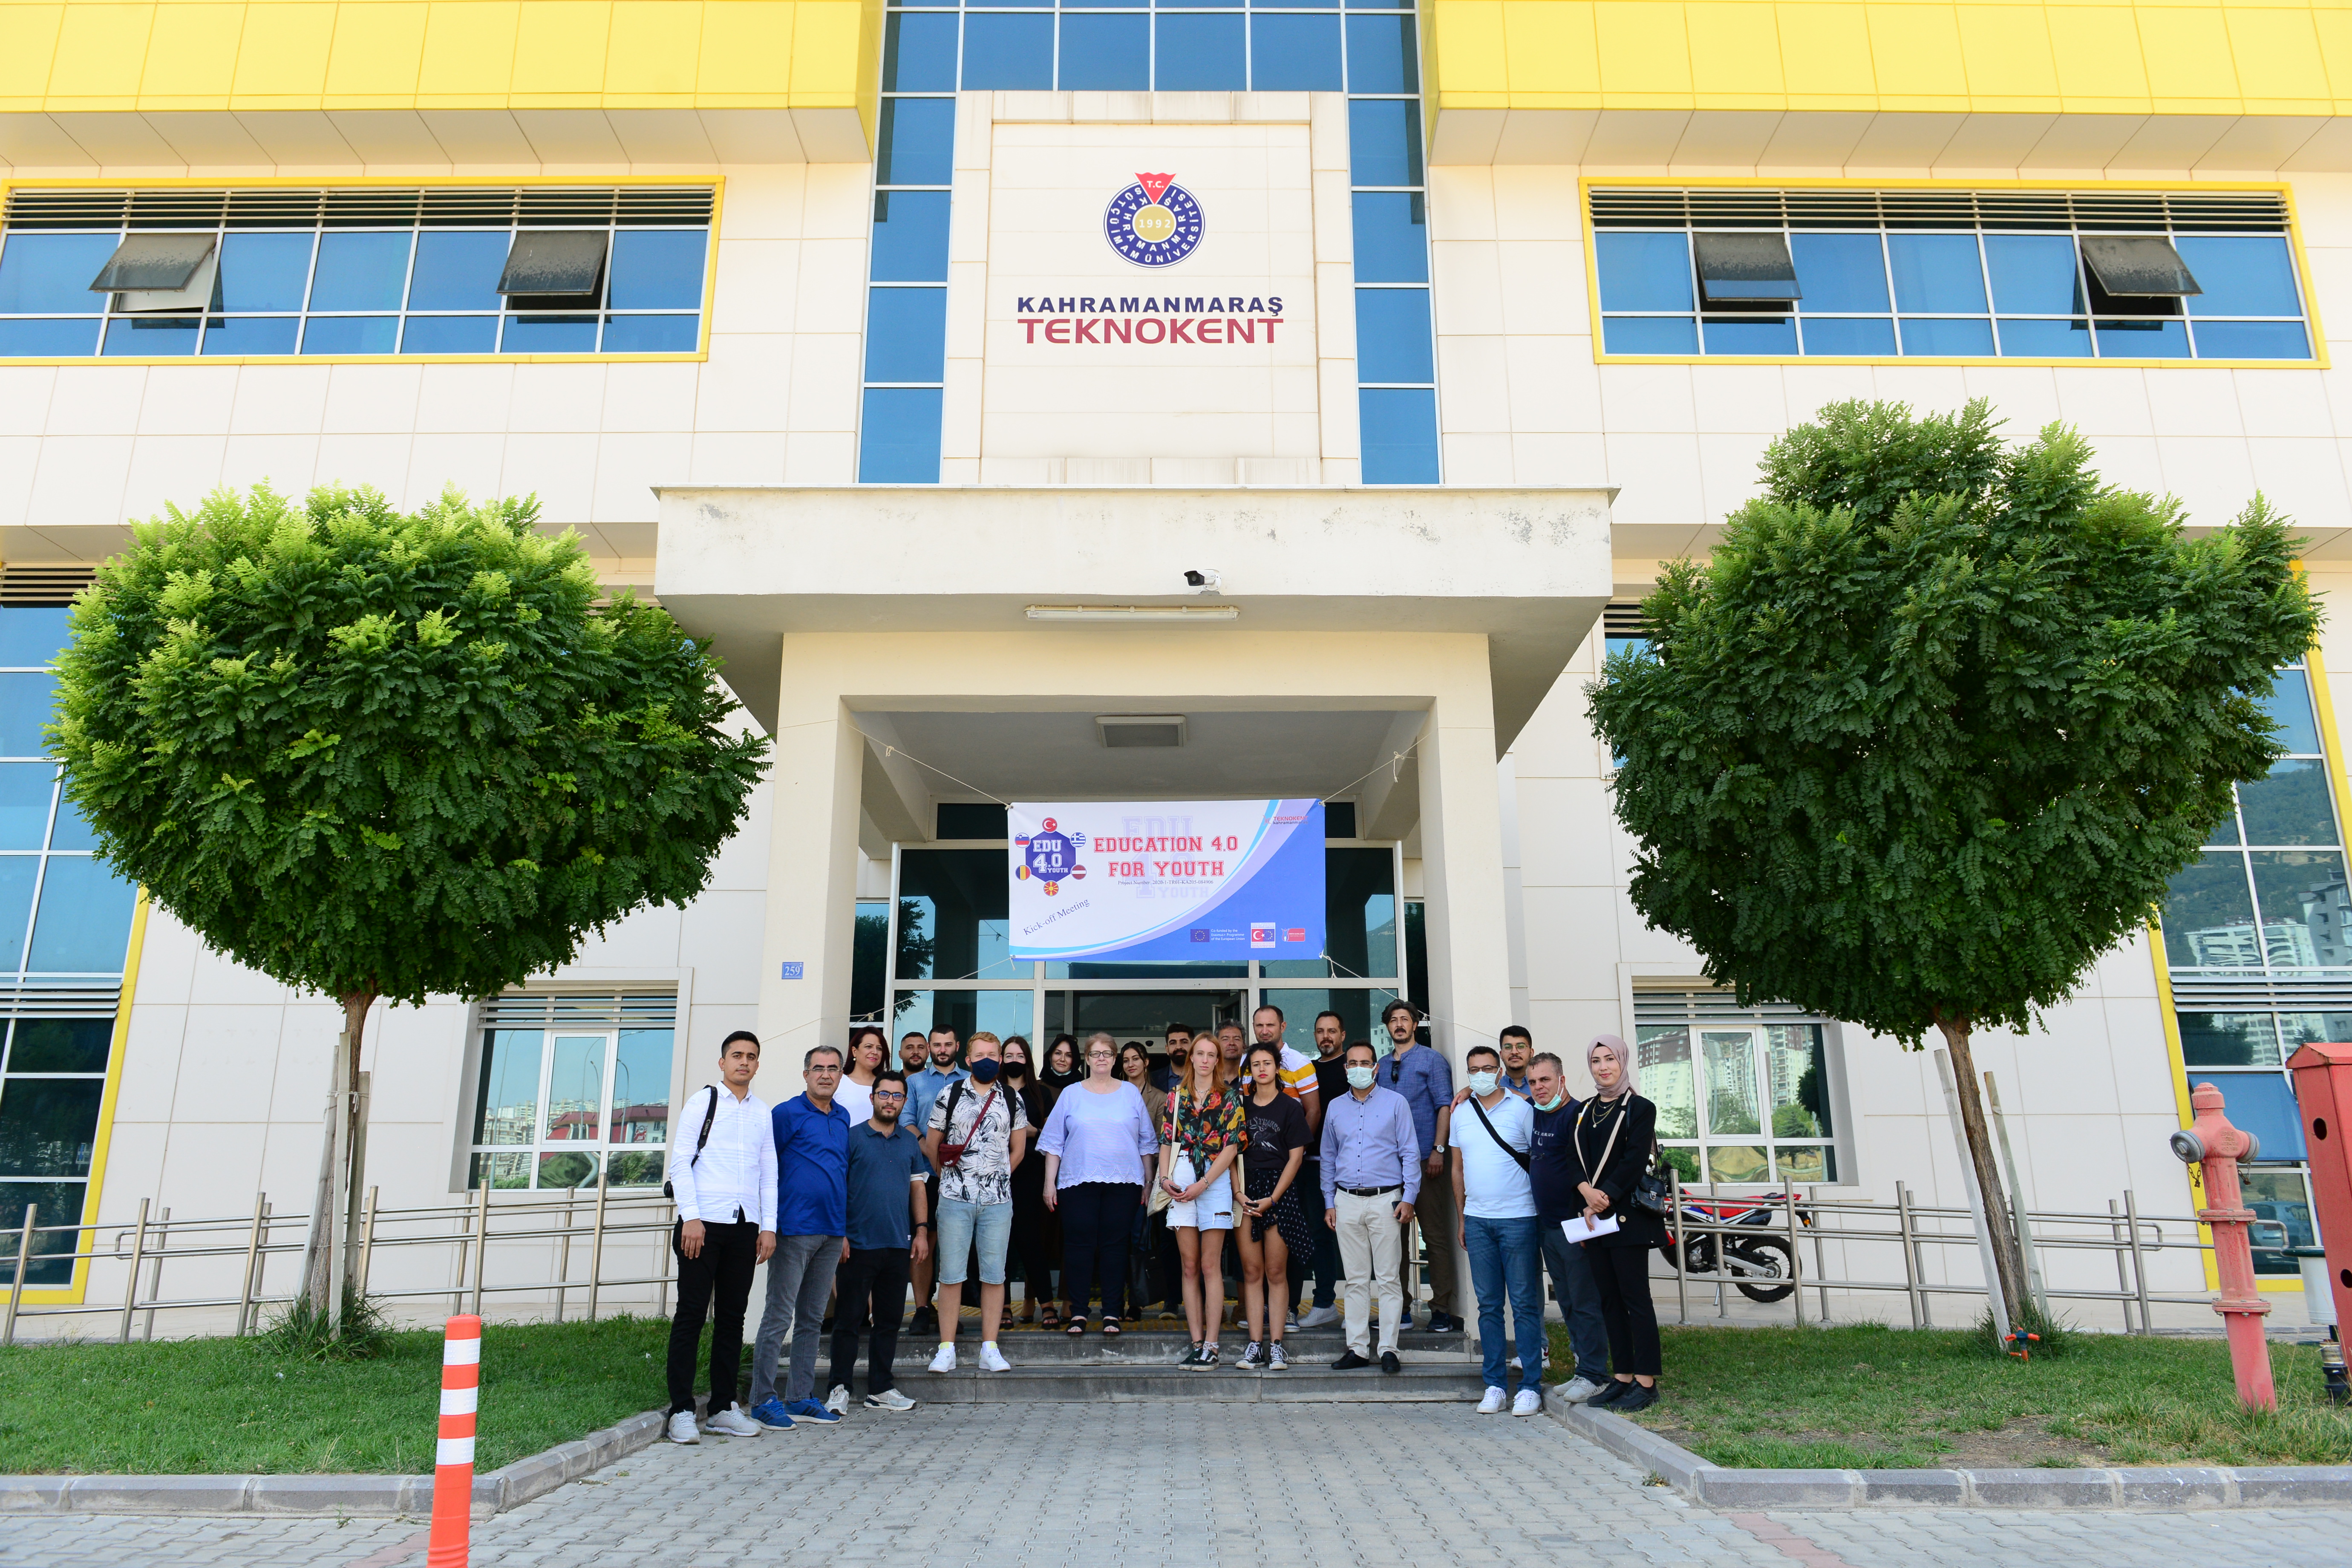 Kahramanmaraş Teknokent Education 4.0 for Youth Kick-off Meeting